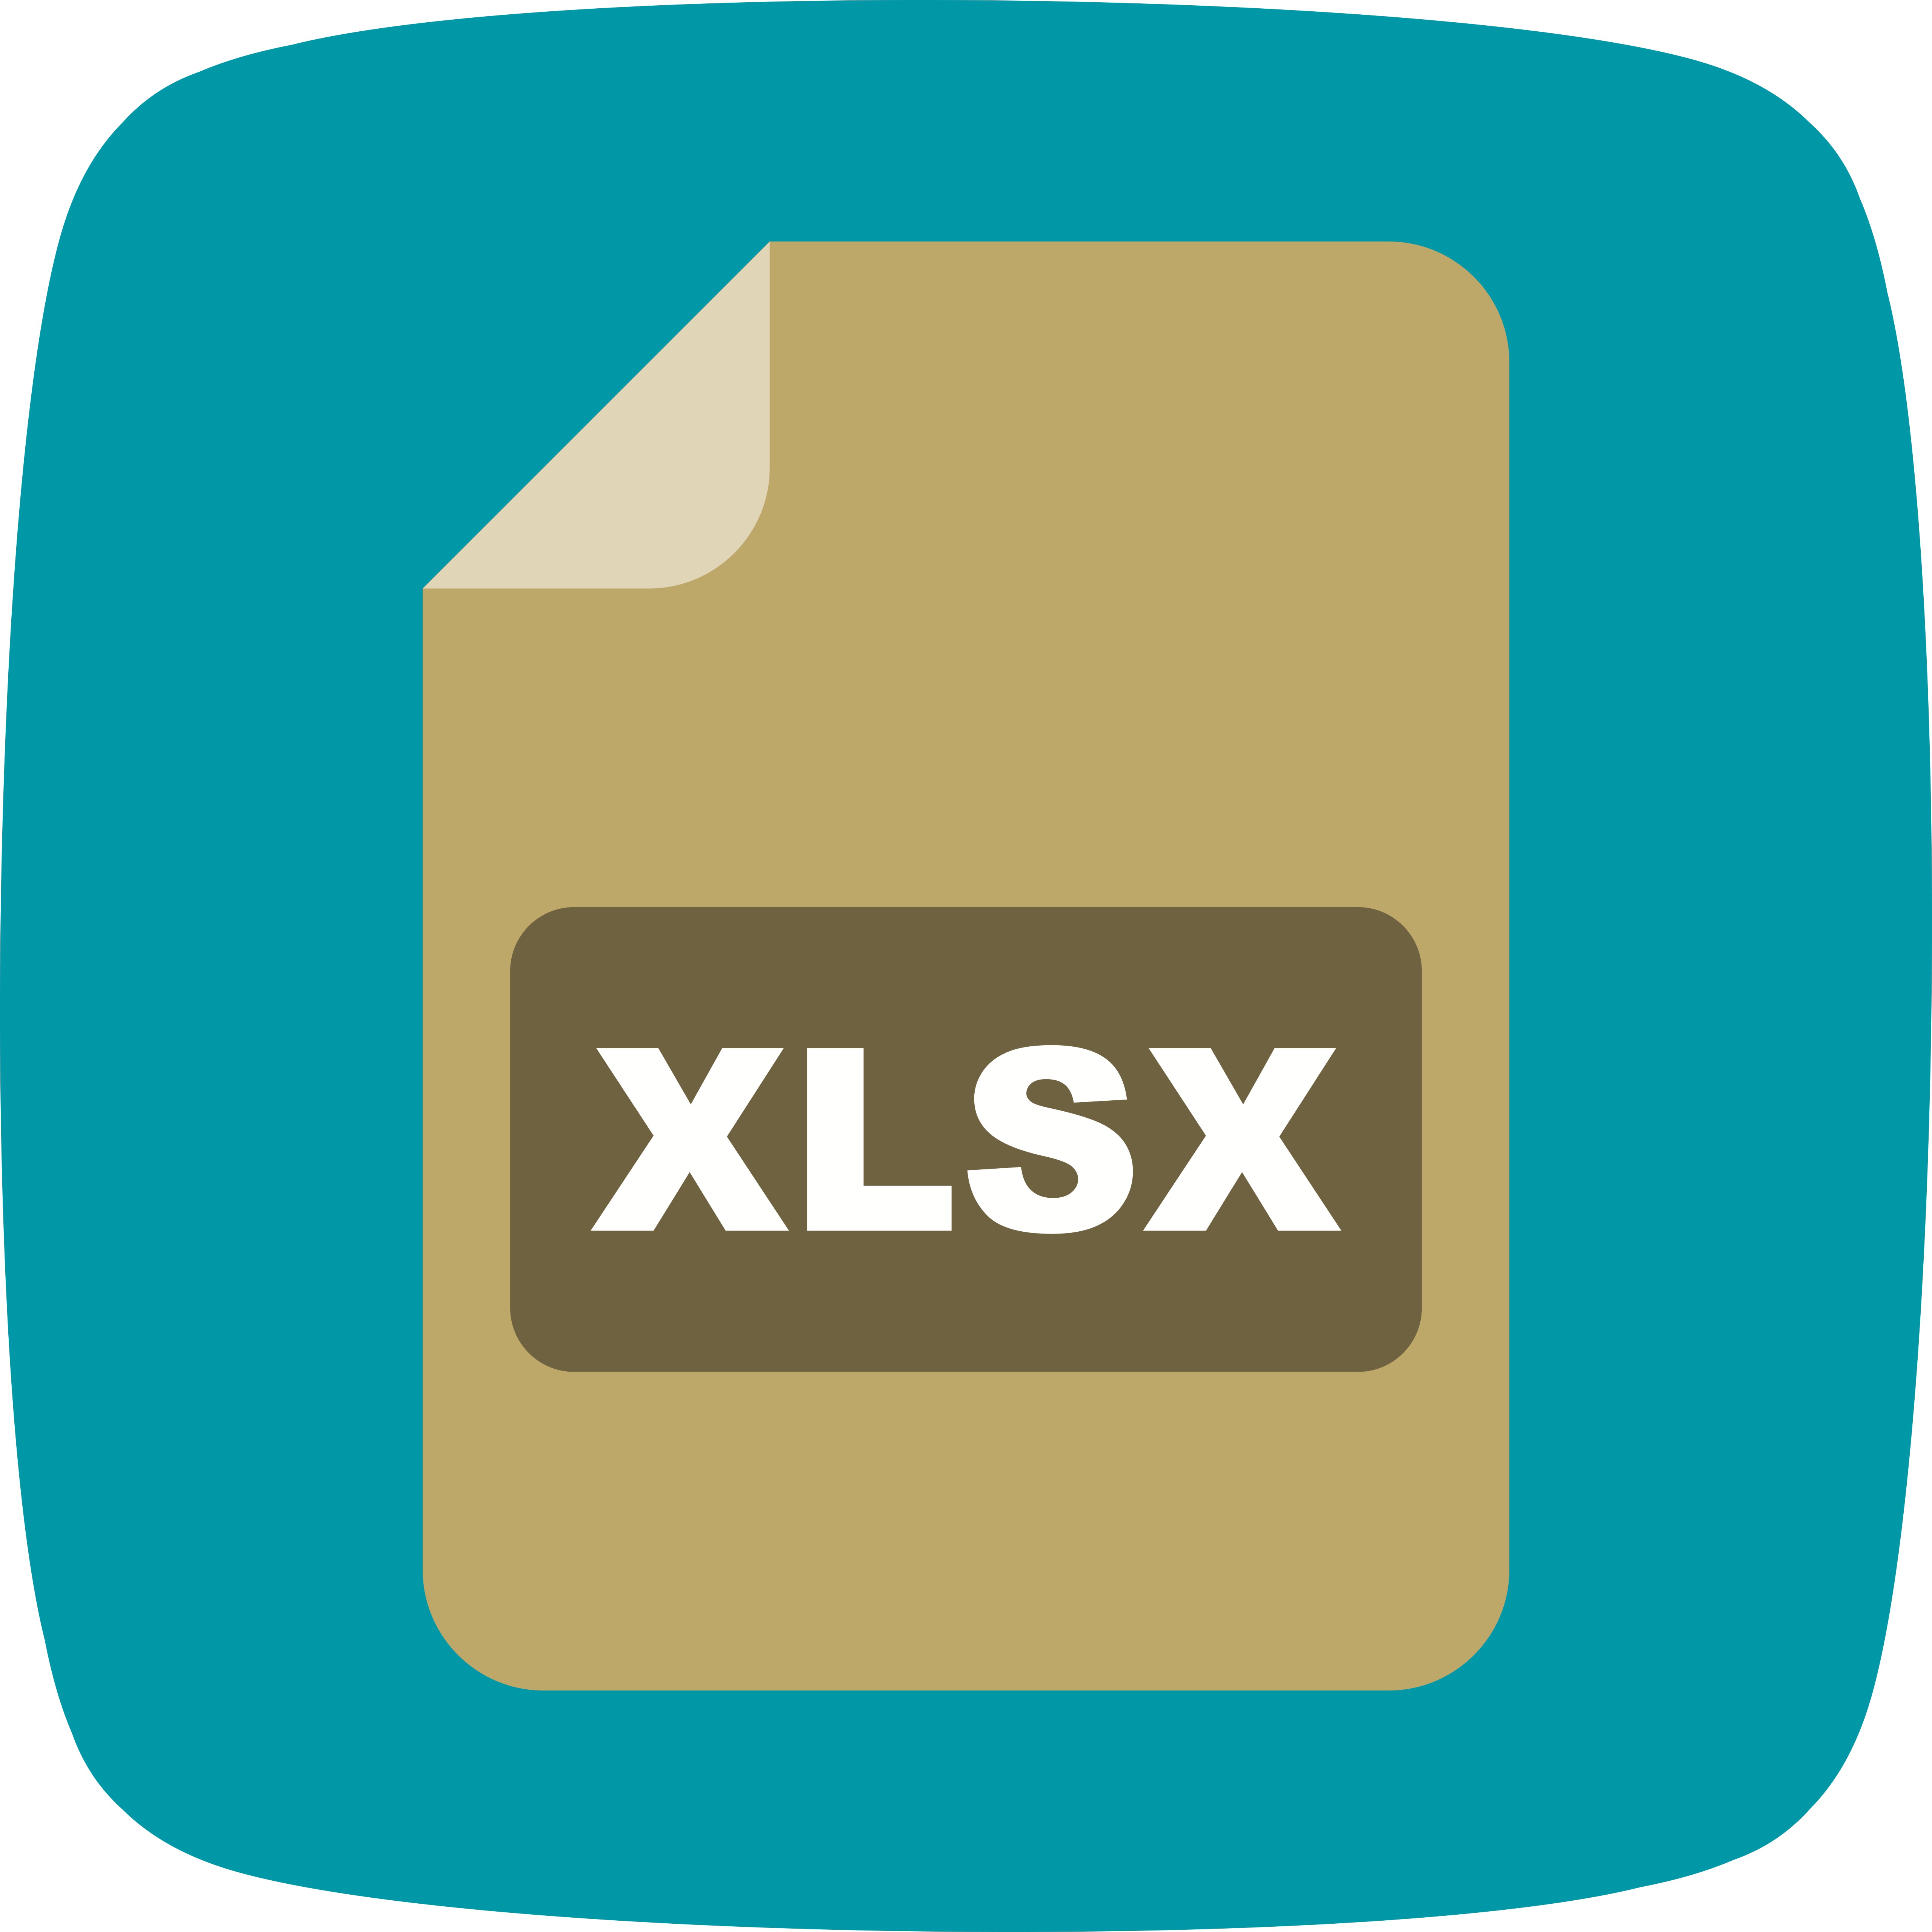 XLSX Vector Icon 362330 Vector Art at Vecteezy